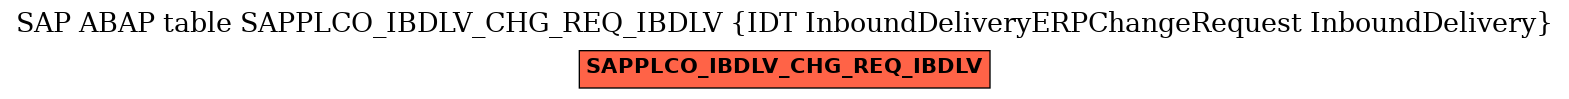 E-R Diagram for table SAPPLCO_IBDLV_CHG_REQ_IBDLV (IDT InboundDeliveryERPChangeRequest InboundDelivery)